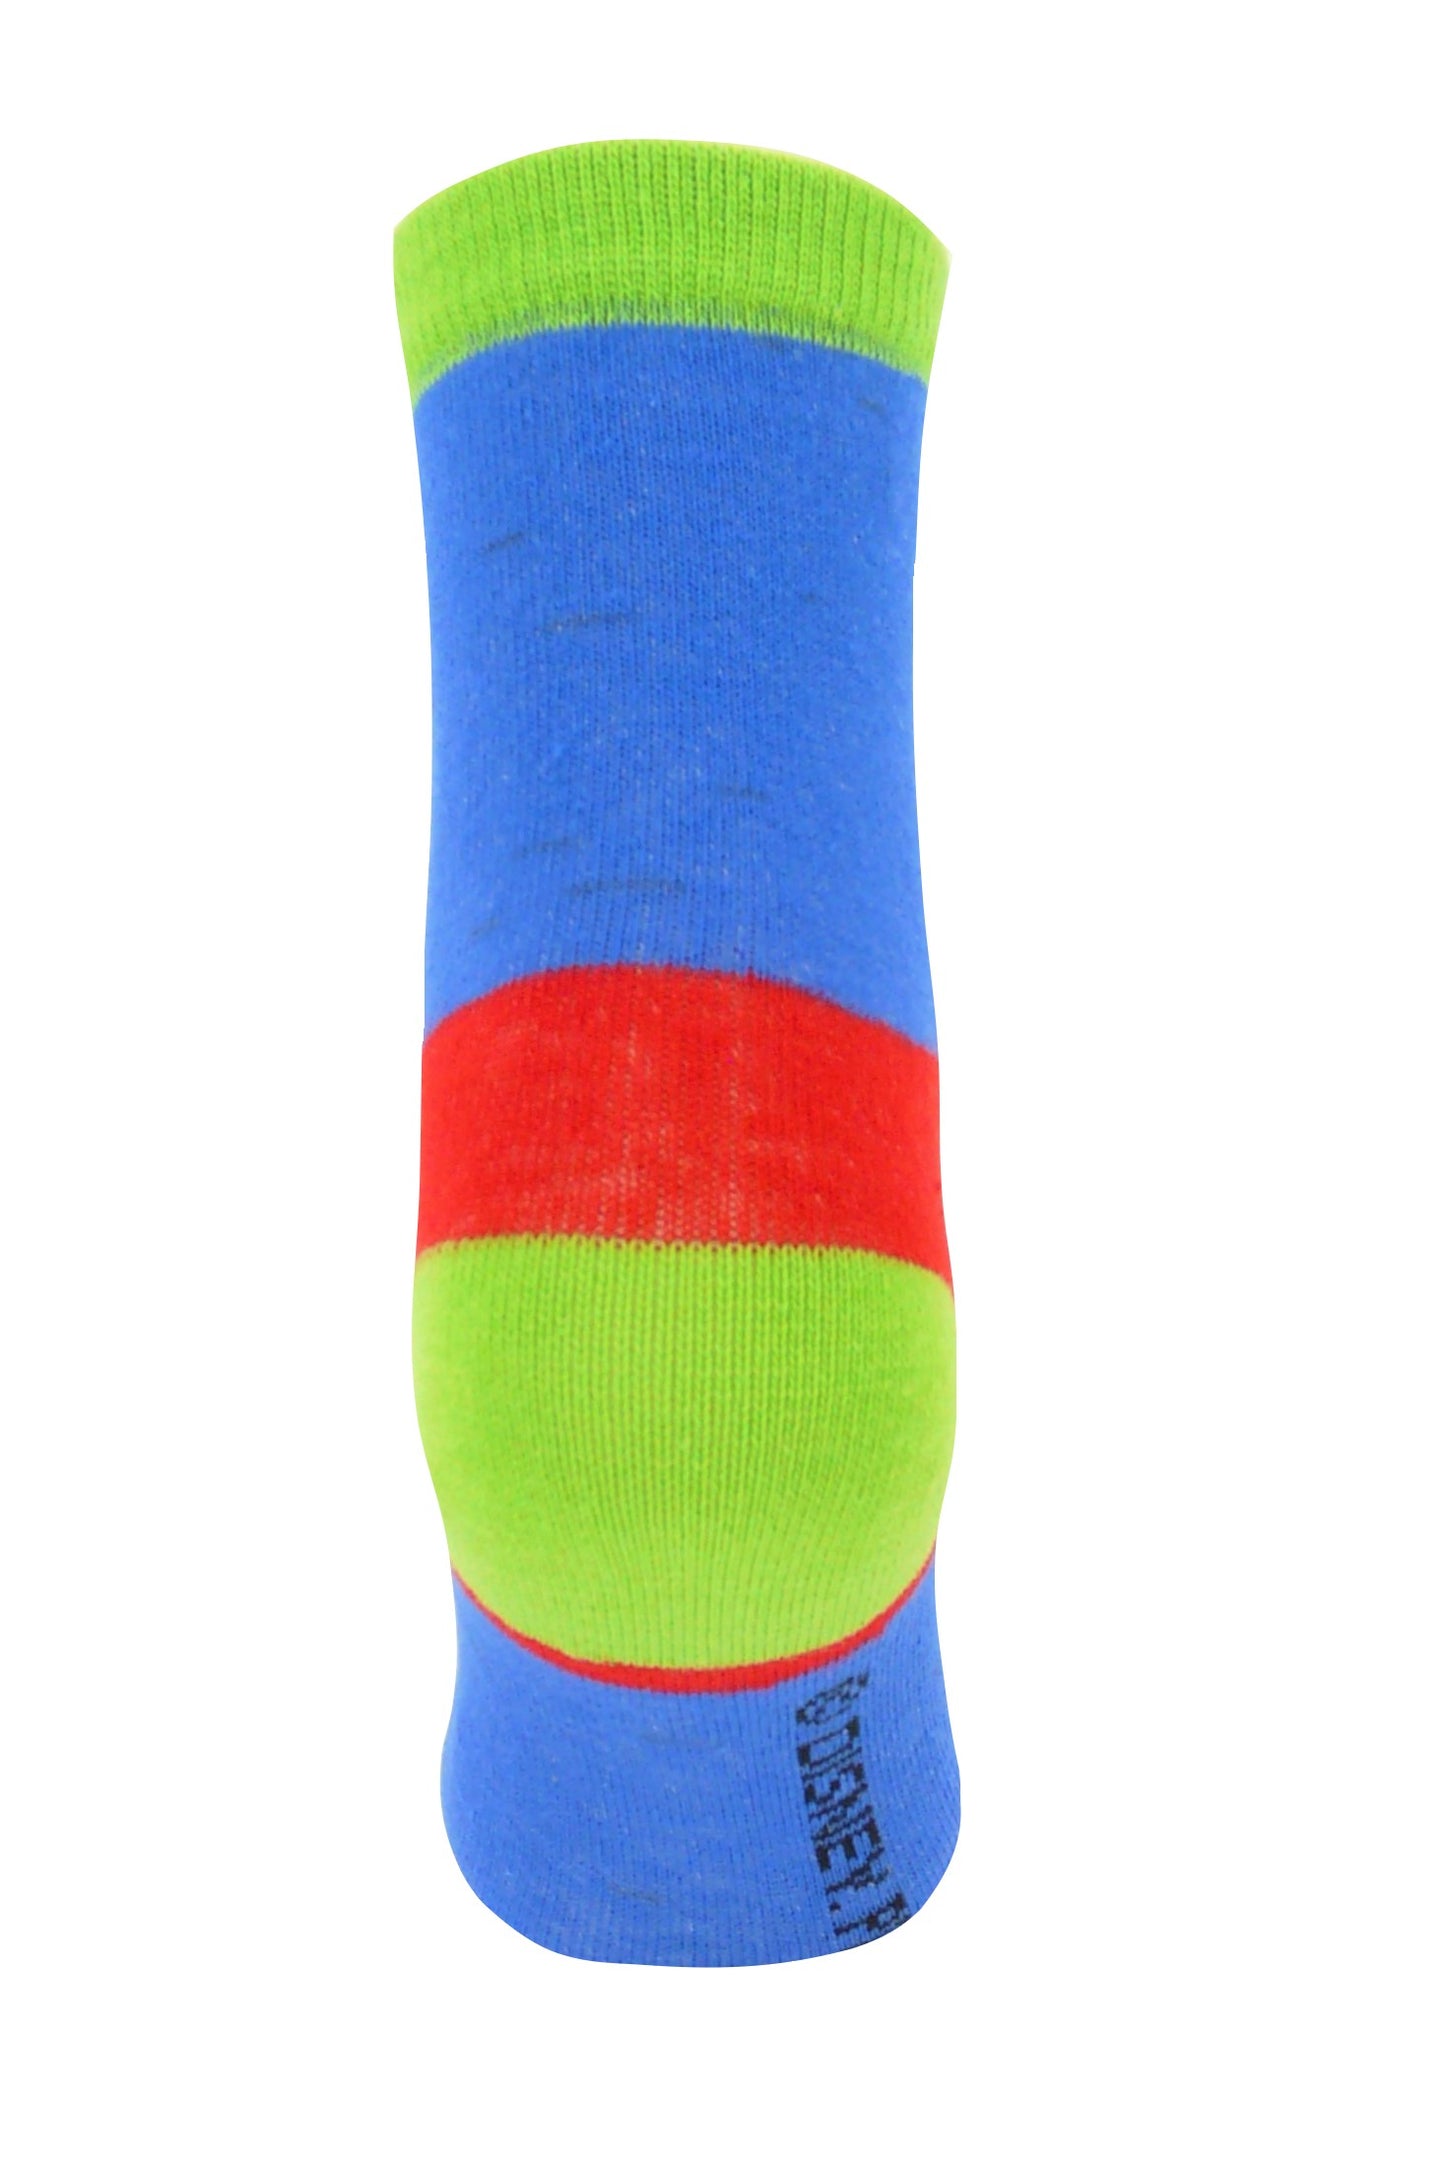 Boys Buzz Lightyear 5 pair Socks UK Size 9-12